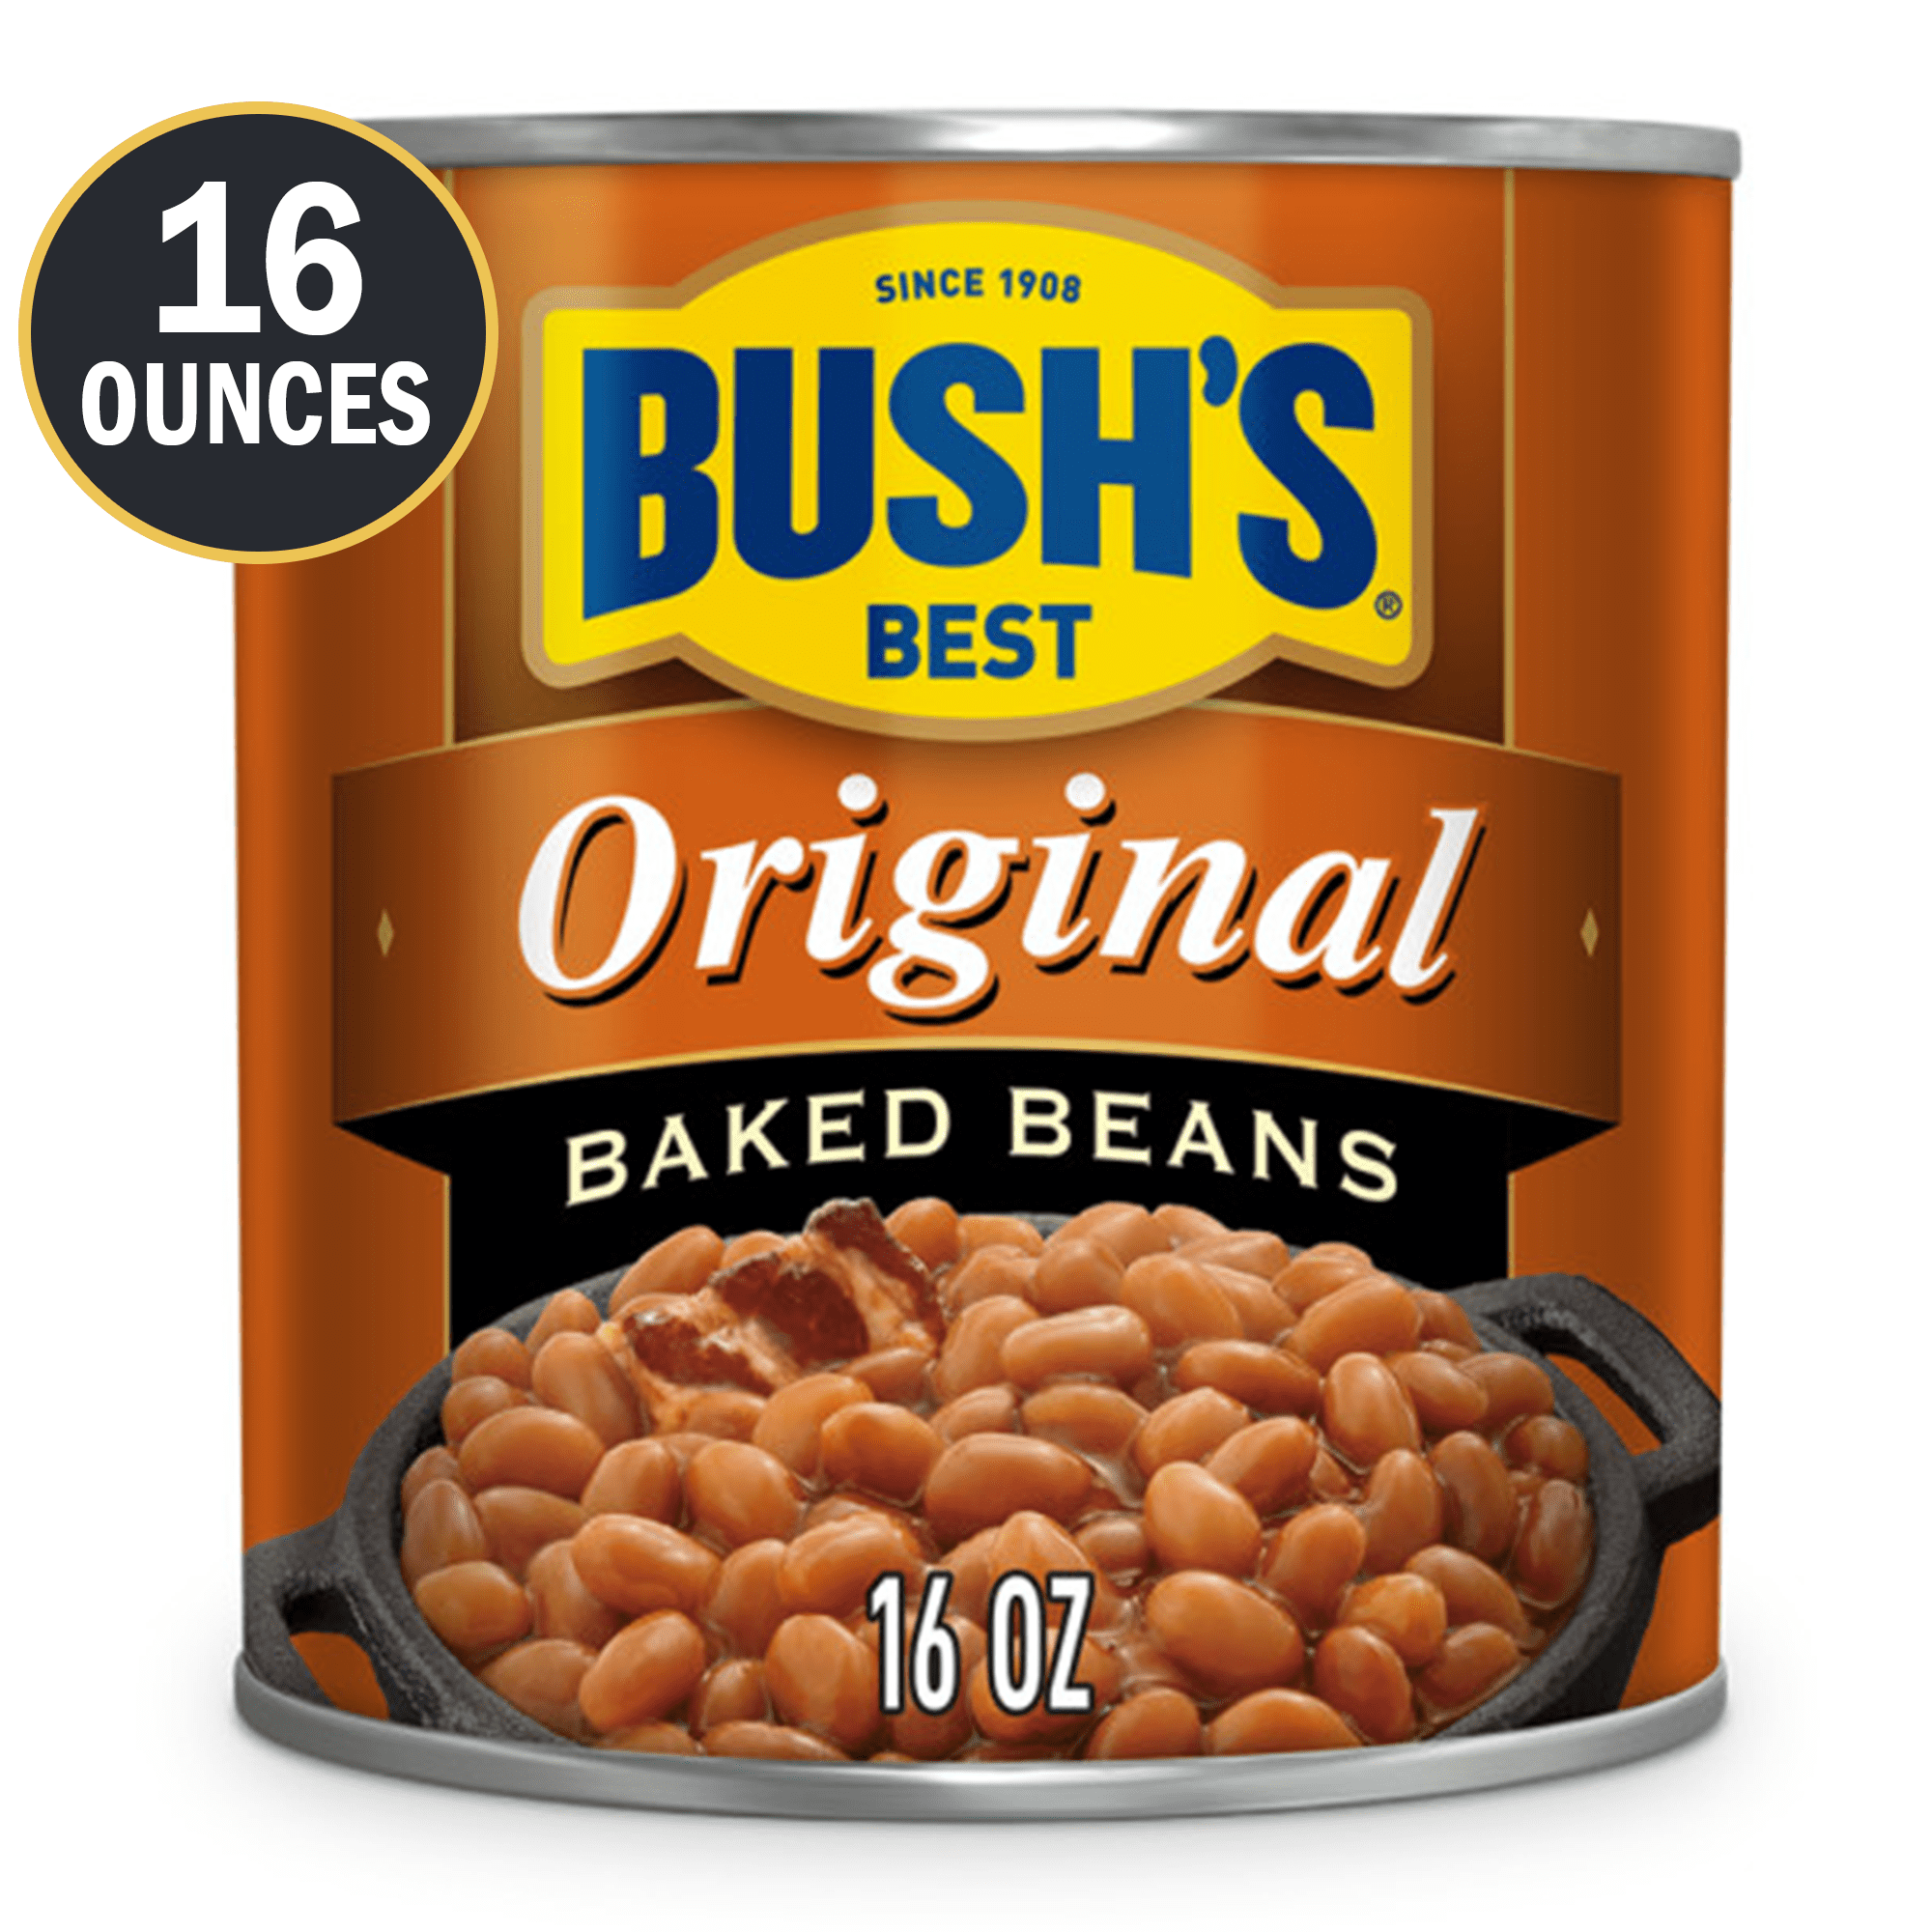 Bush's Original Baked Beans, Canned Beans, 16 oz